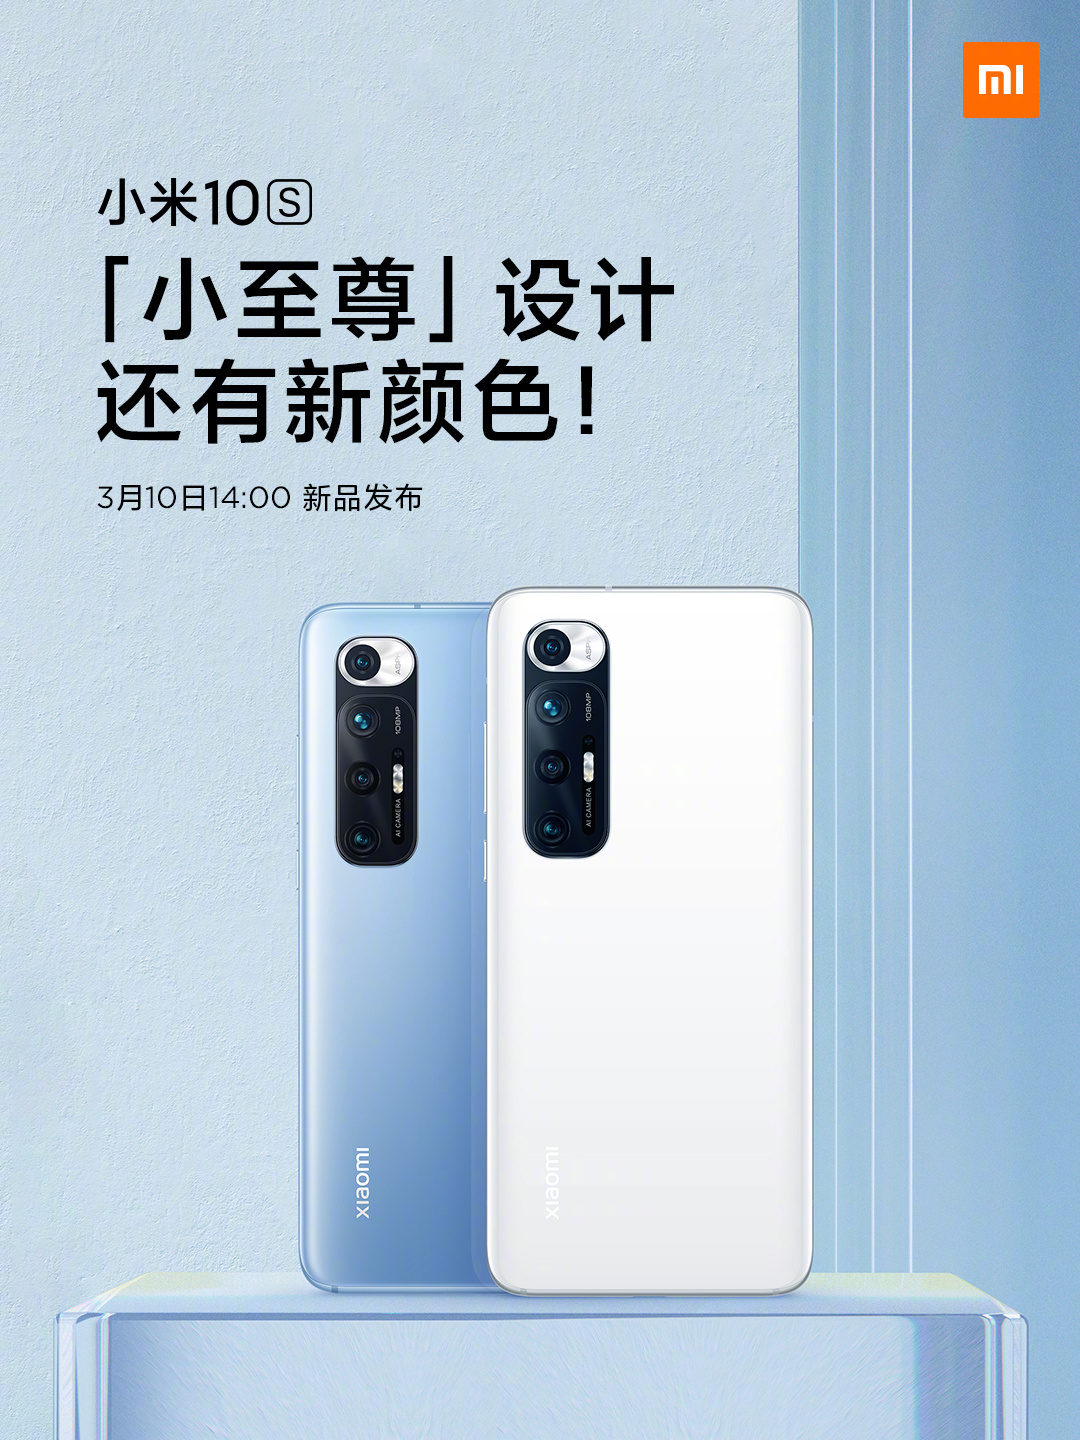  Стала известна дата Xiaomi Mi 10S - новинки компании Xiaomi  - xiaomi_nazvala_datu_anonsa_mi_10s___blizhajshej_novinki_brenda_2